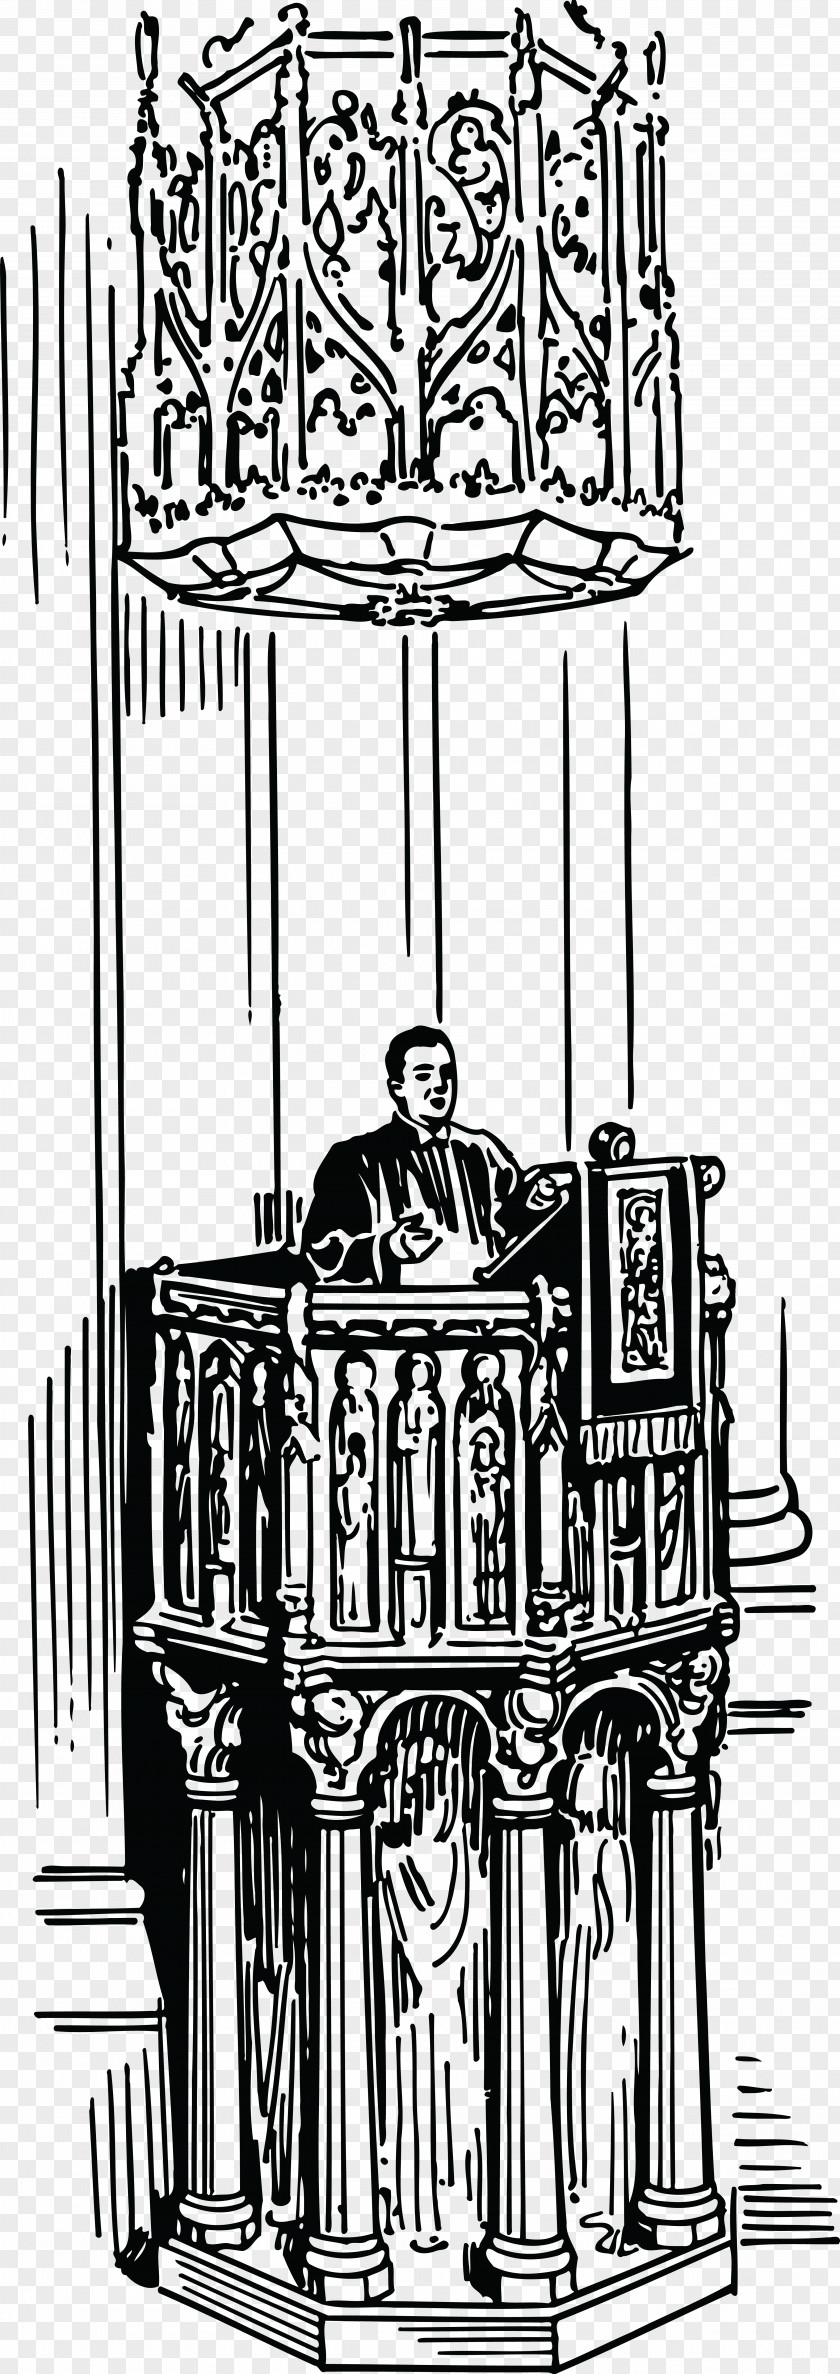 Church Bible Clip Art Preacher Pulpit Clergy PNG